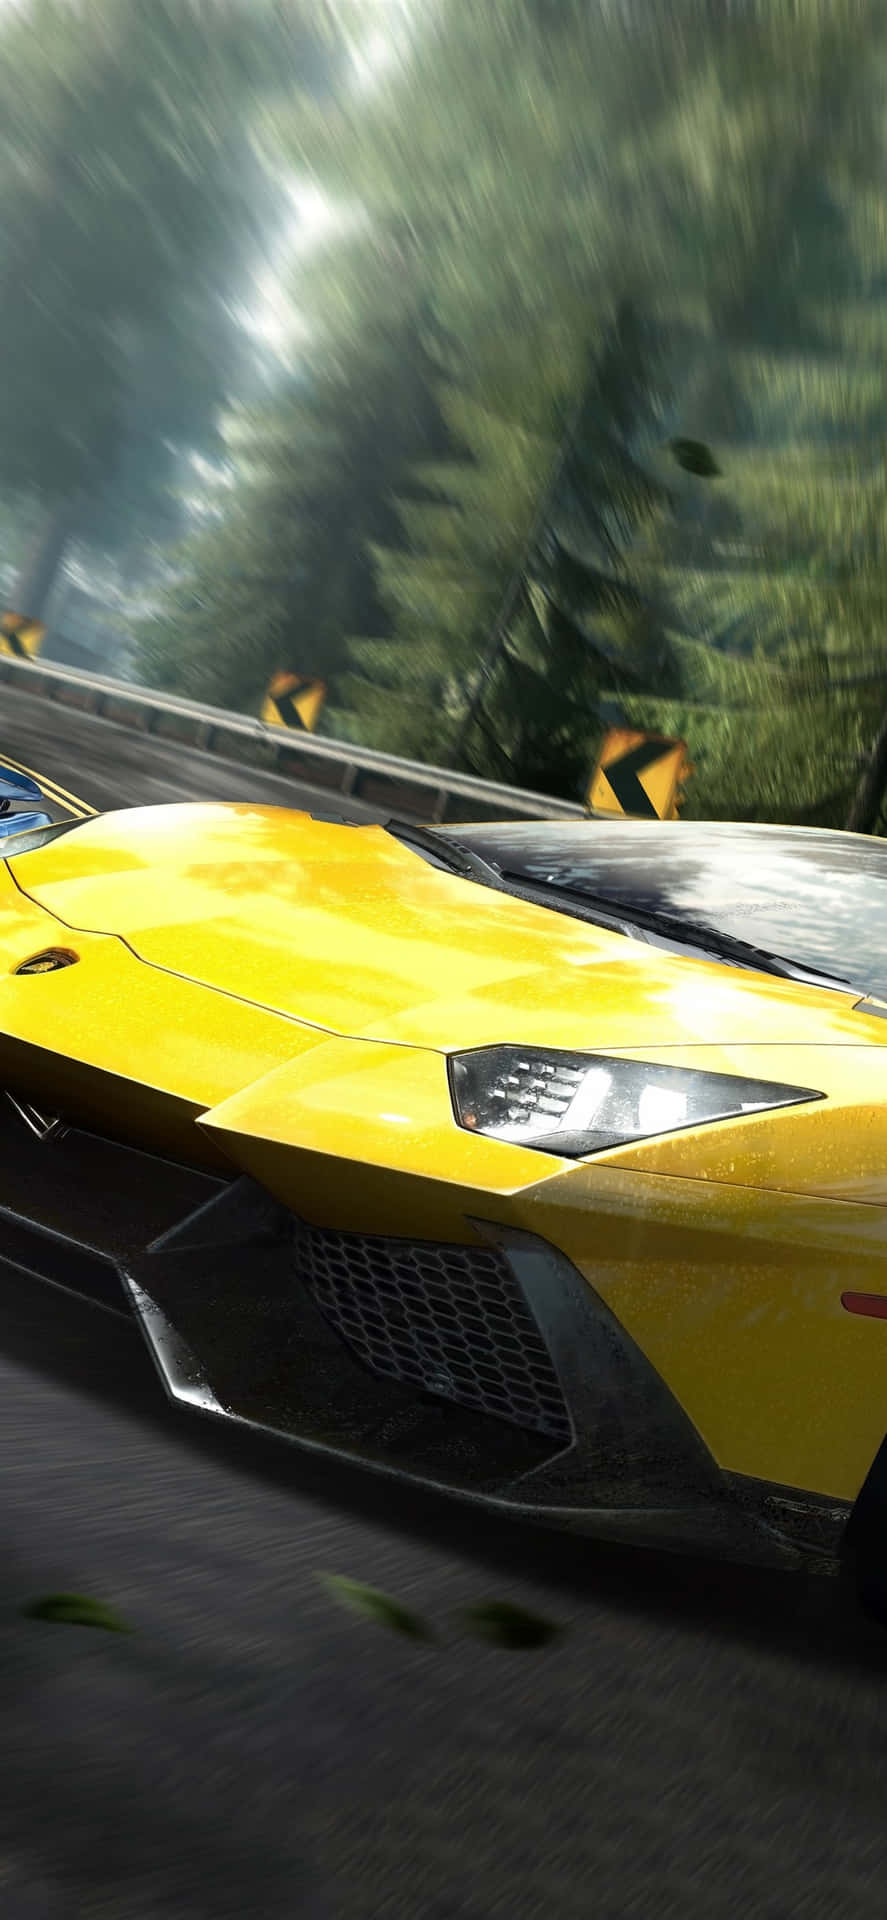 Iphonexs Need For Speed Payback Bakgrund Med Gula Lamborghini Aventador.